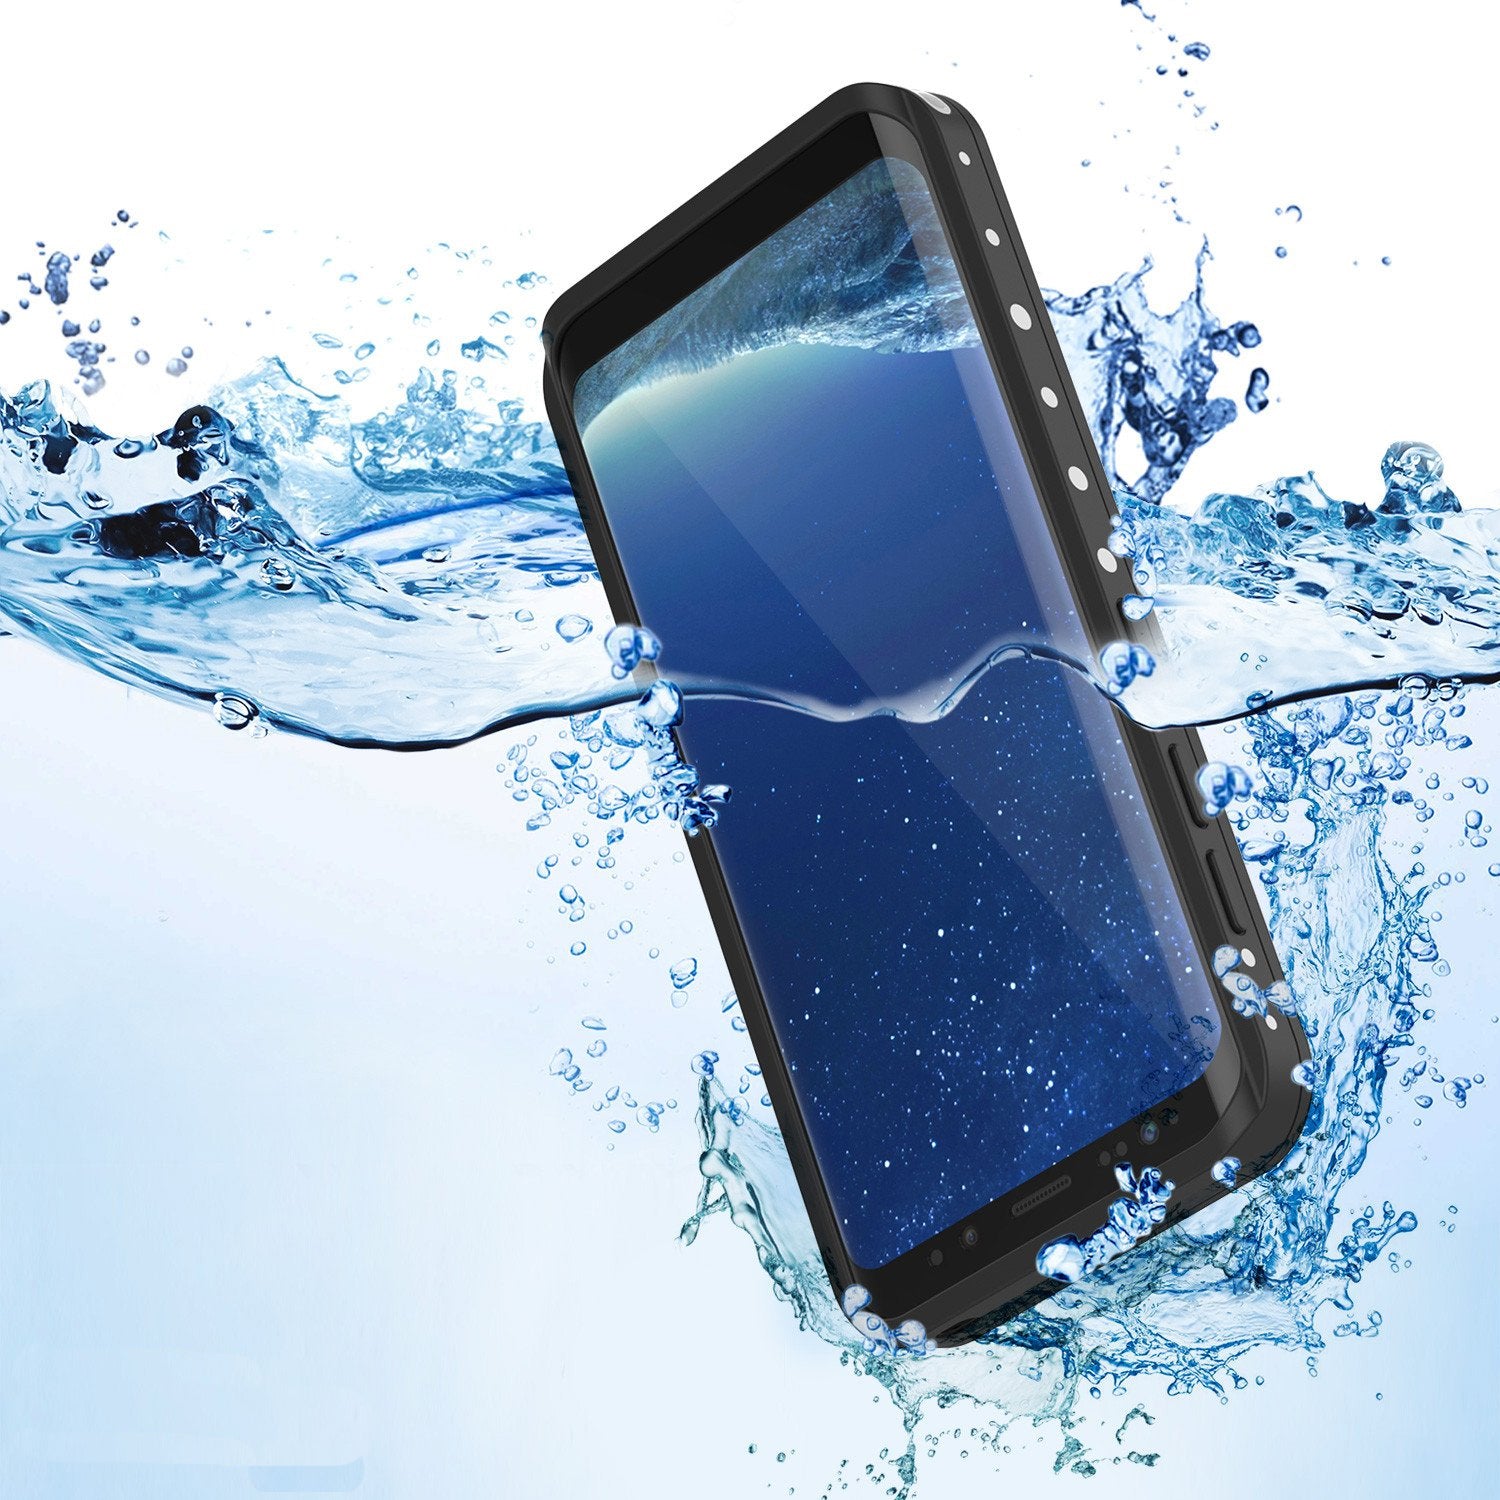 Galaxy S8 Waterproof Case, Punkcase StudStar White Thin 6.6ft Underwater IP68 Shock/Snow Proof